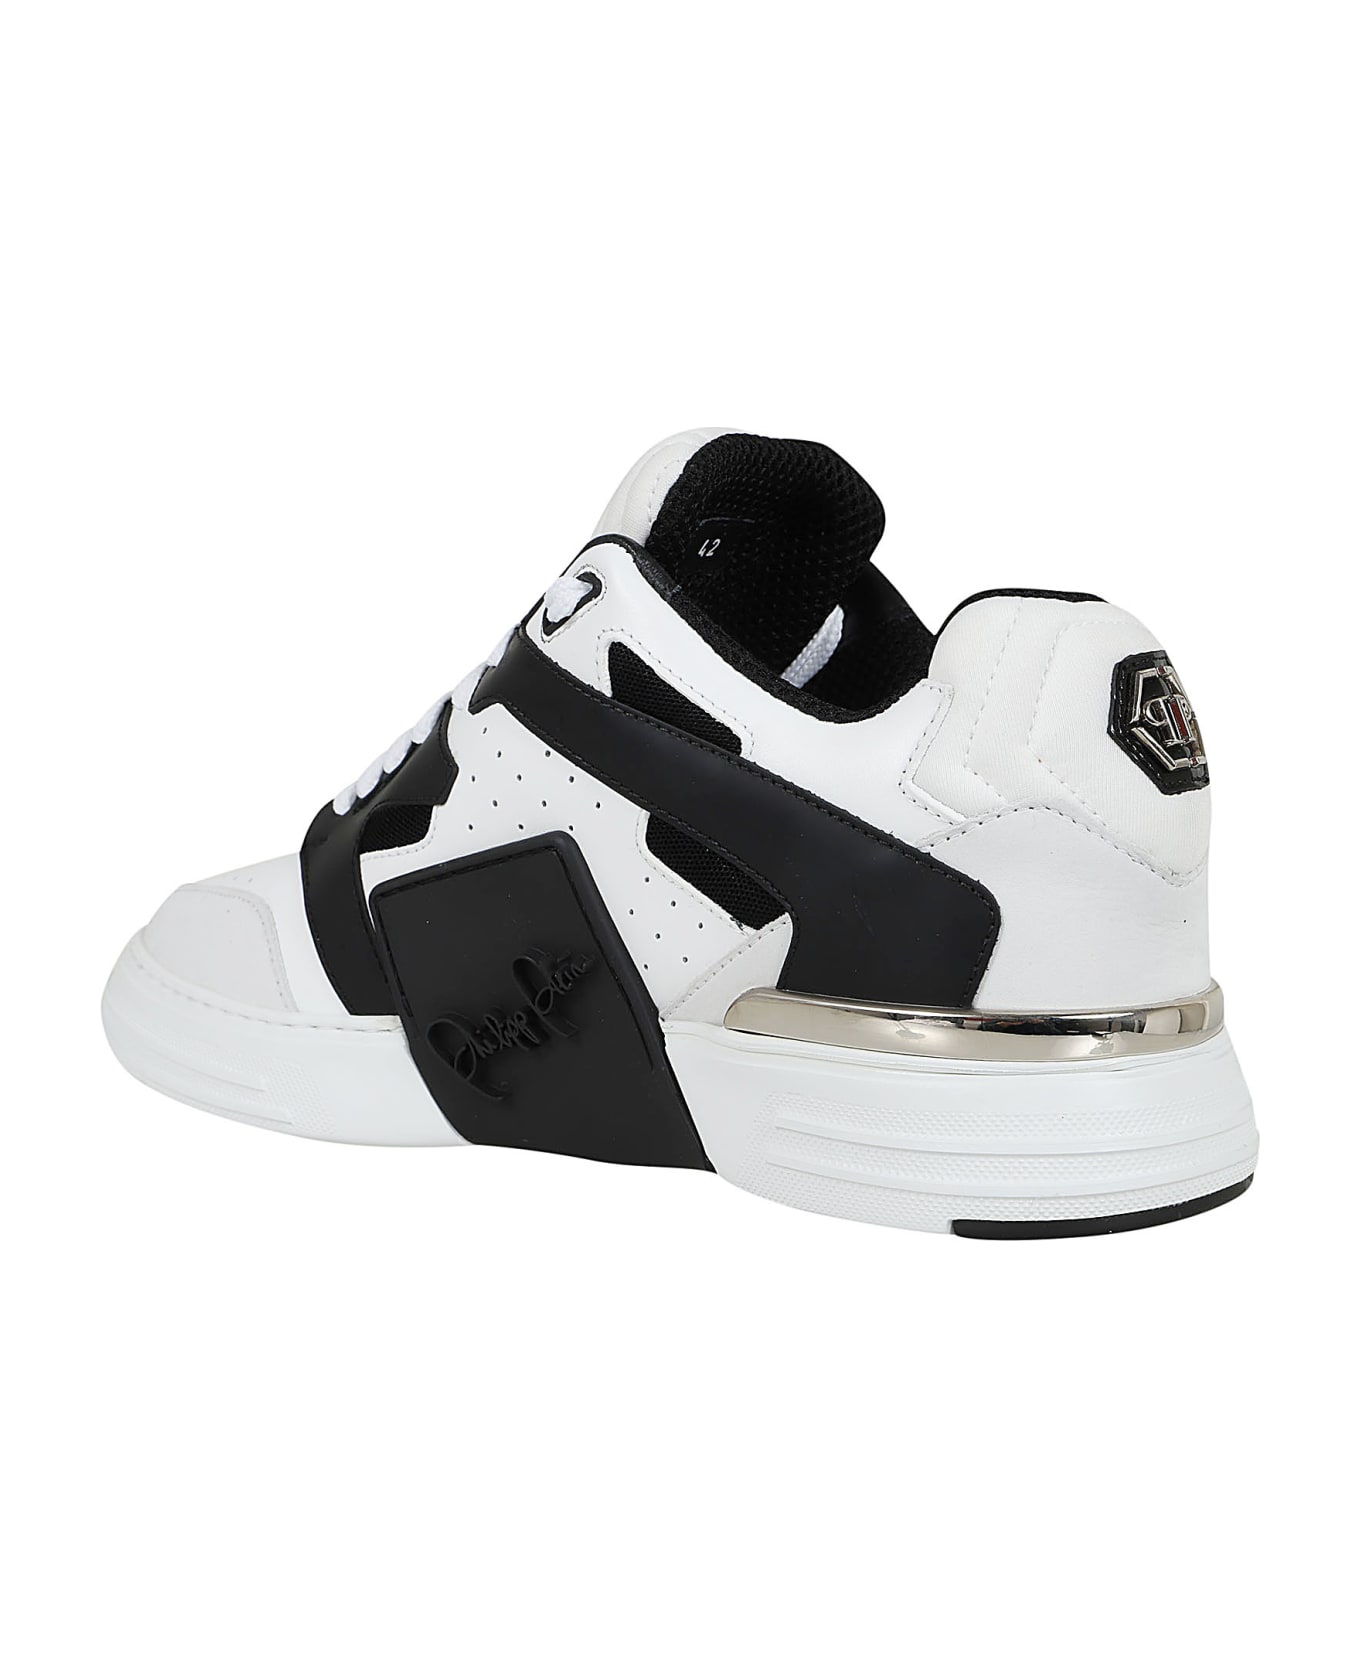 Philipp Plein Mix Leather Lo-top Sneakers - White Black スニーカー